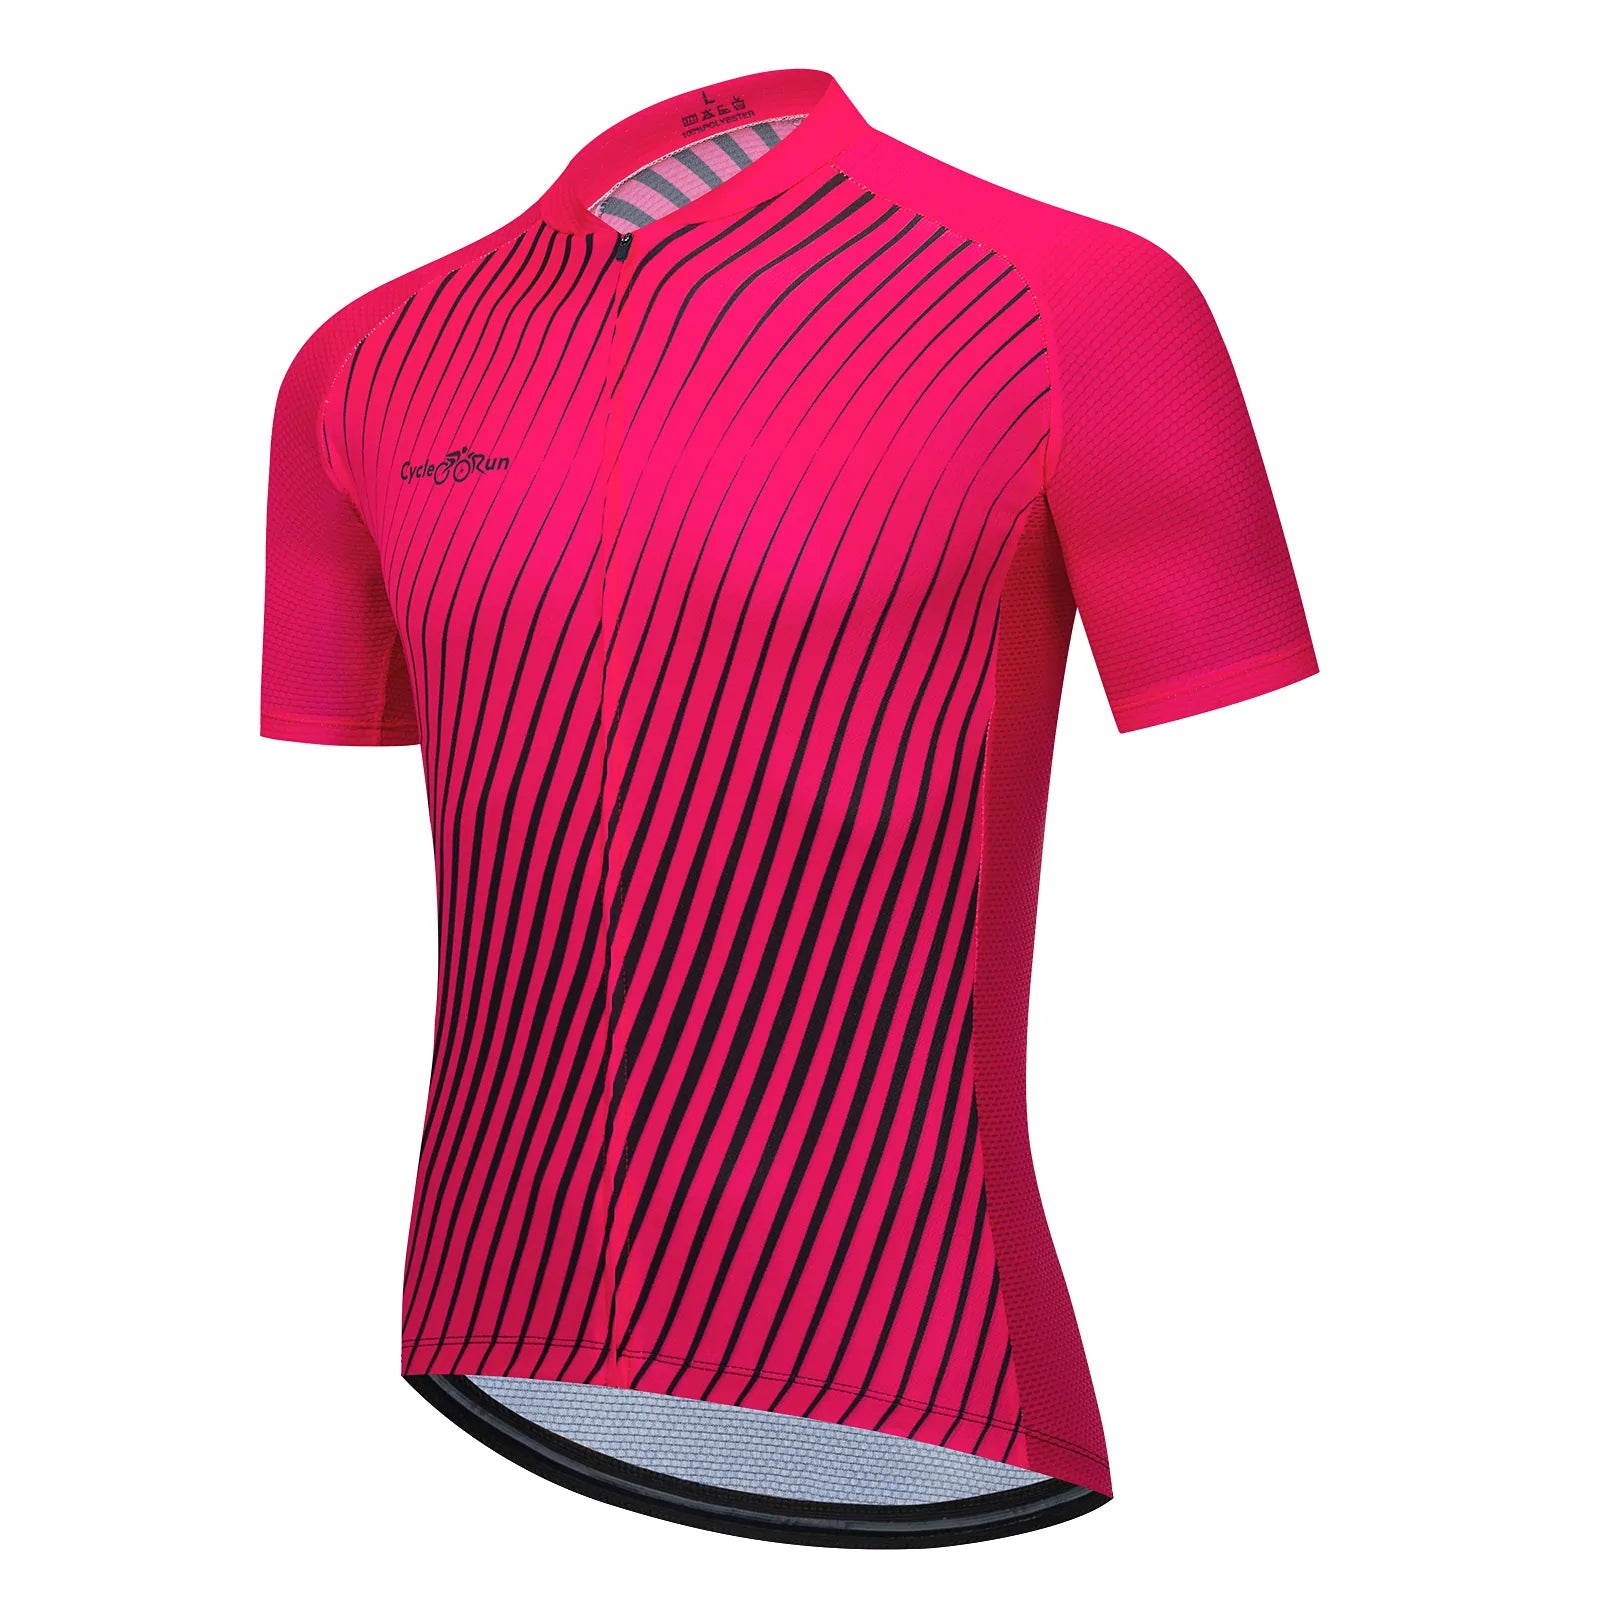 Neon jersey Model1 - Pink for women